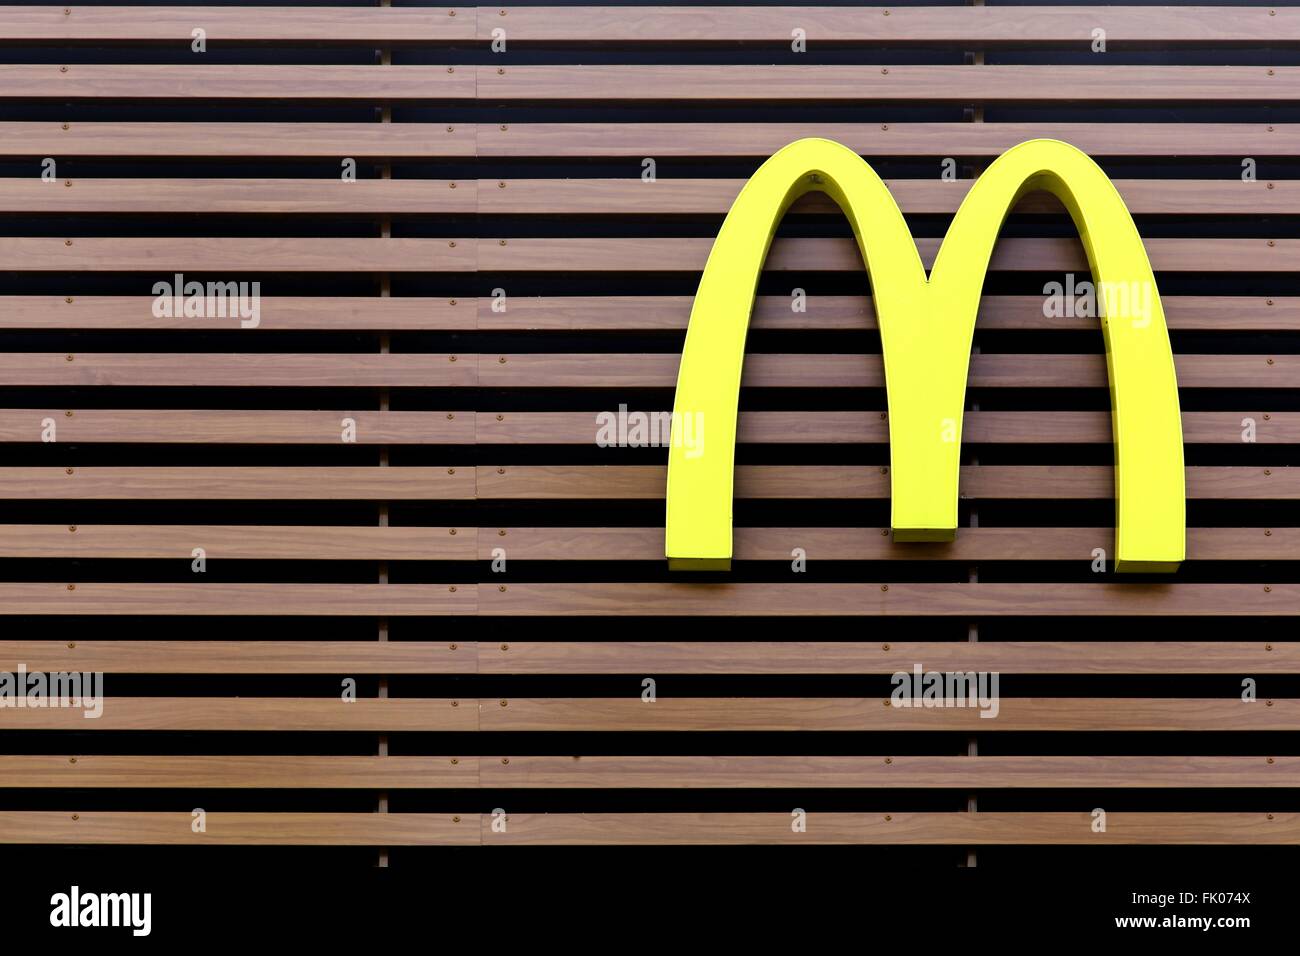 McDonald's logo on a wall Stock Photo